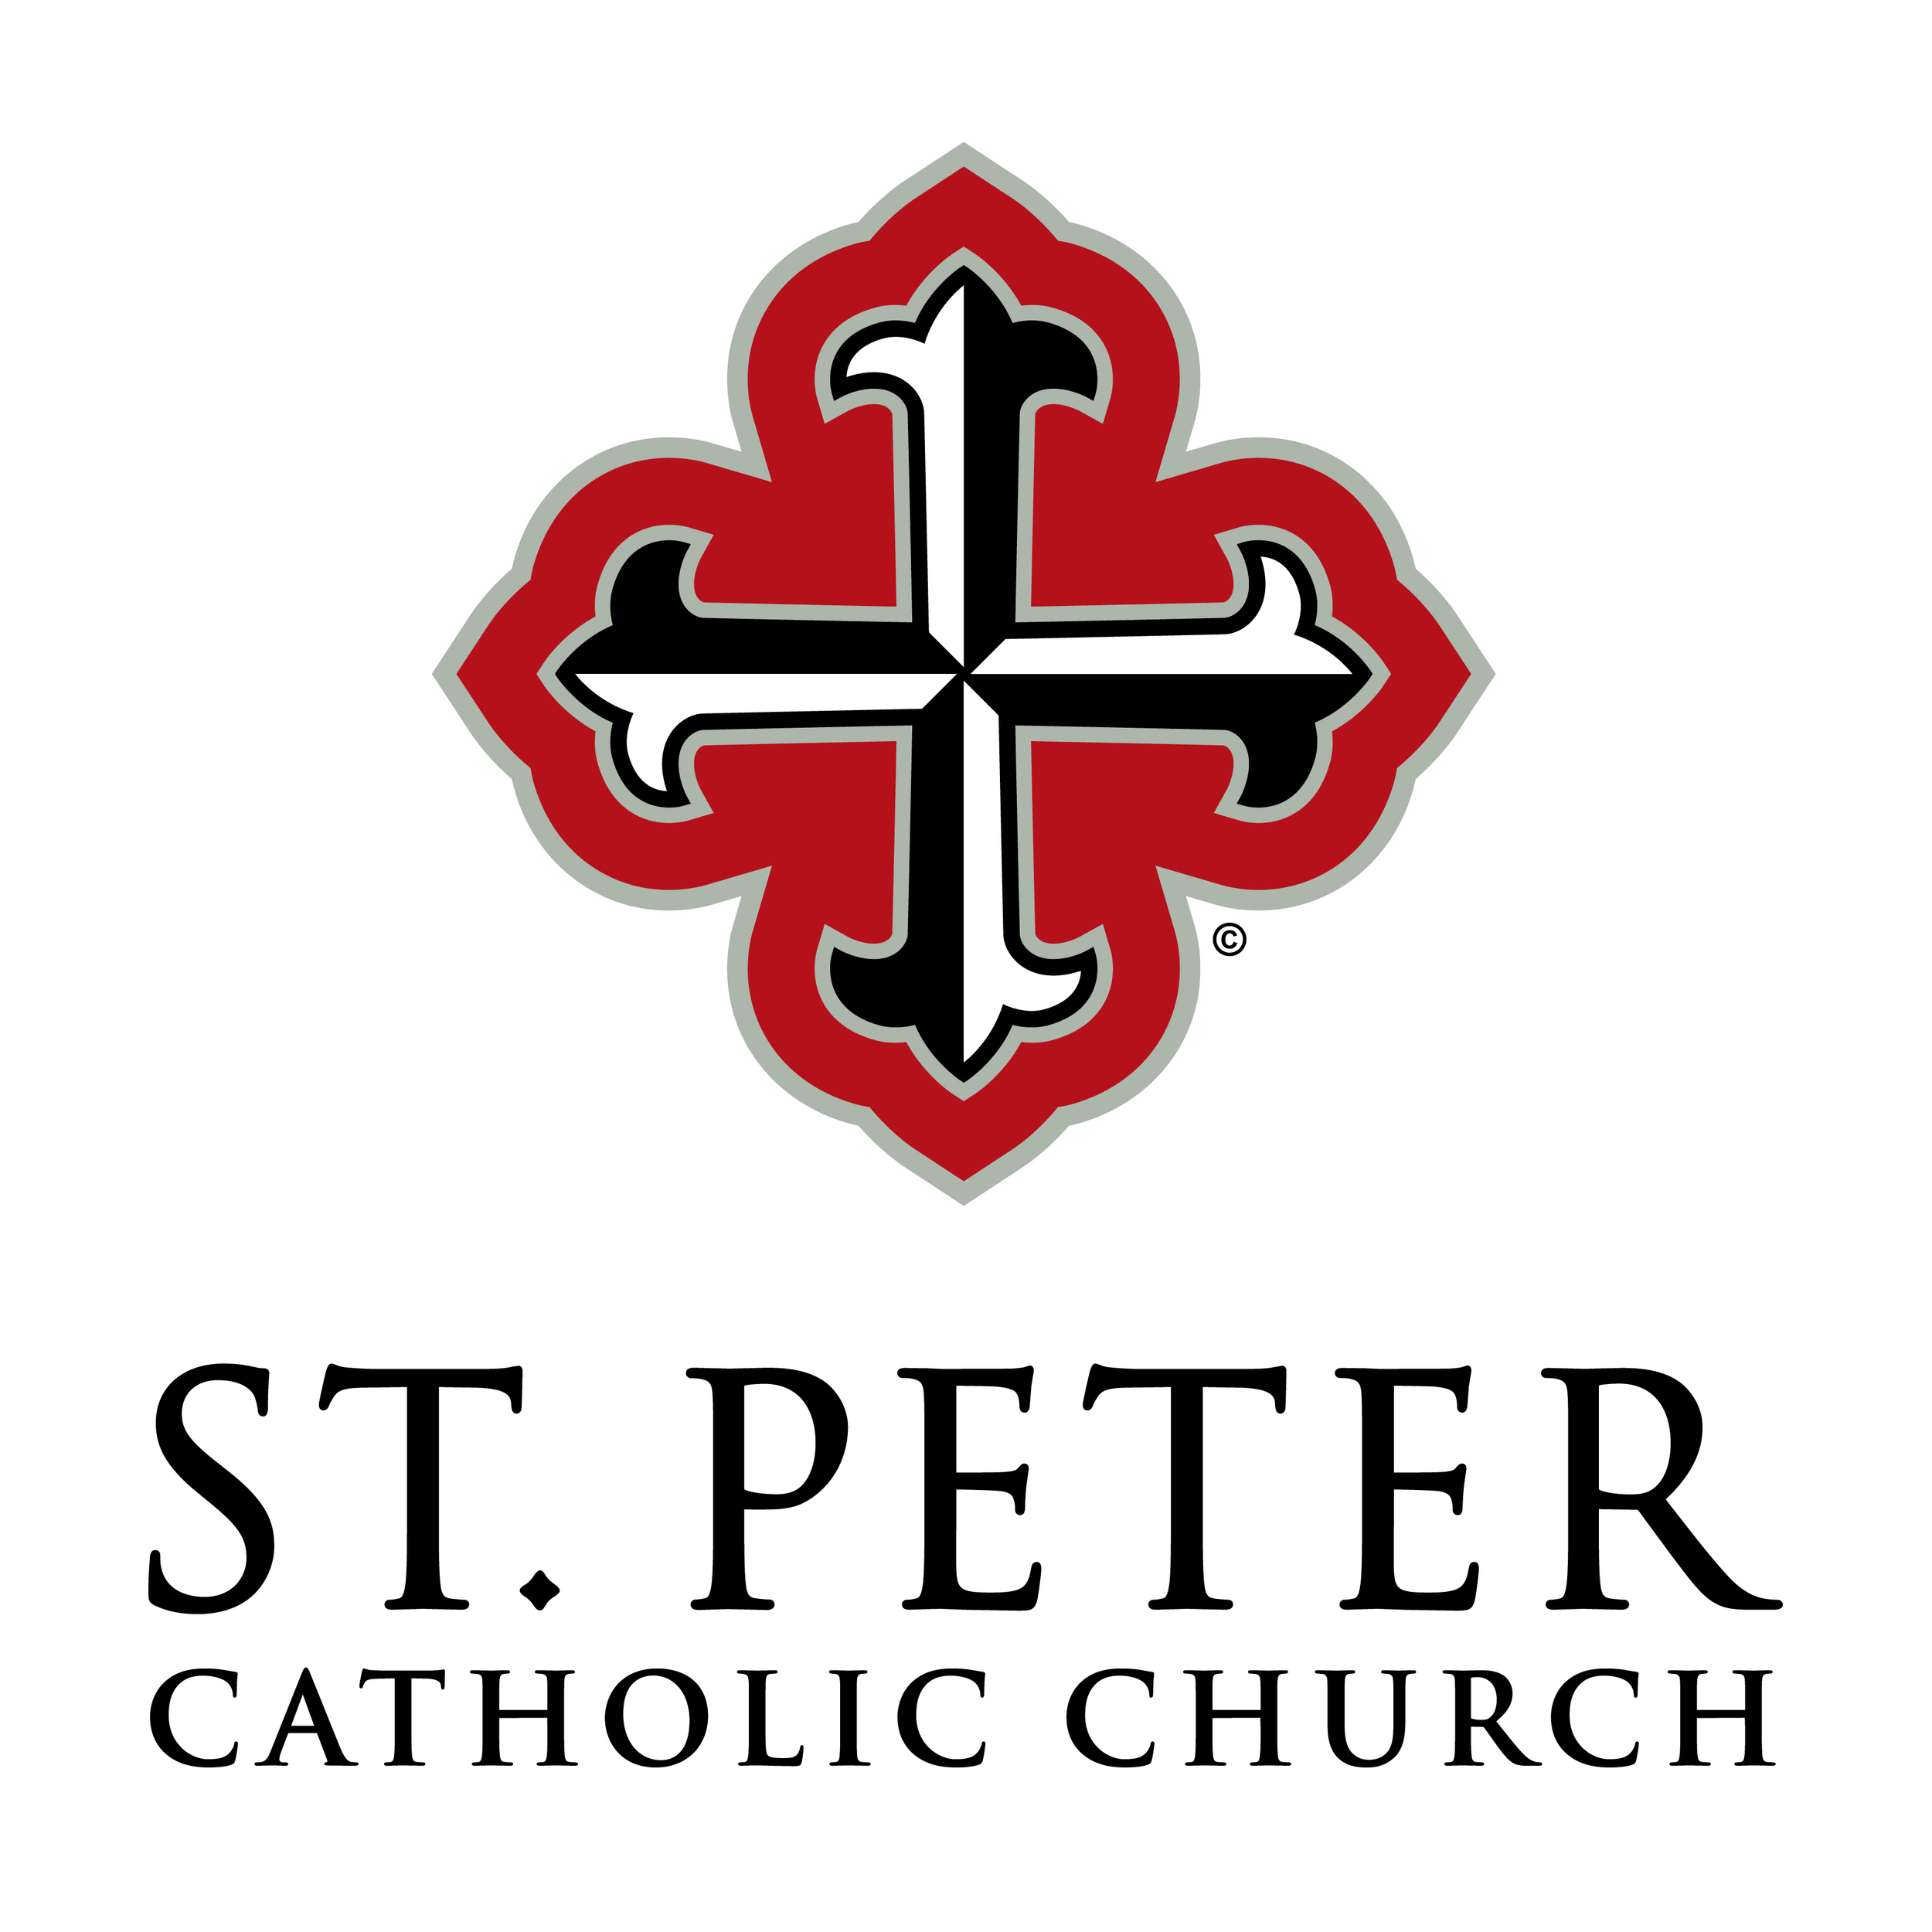  St. Peter Catholic Church  Branding creative and design by Chuck Mitchell  Pro bono work developed for St. Peter Catholic Church, Memphis, TN 